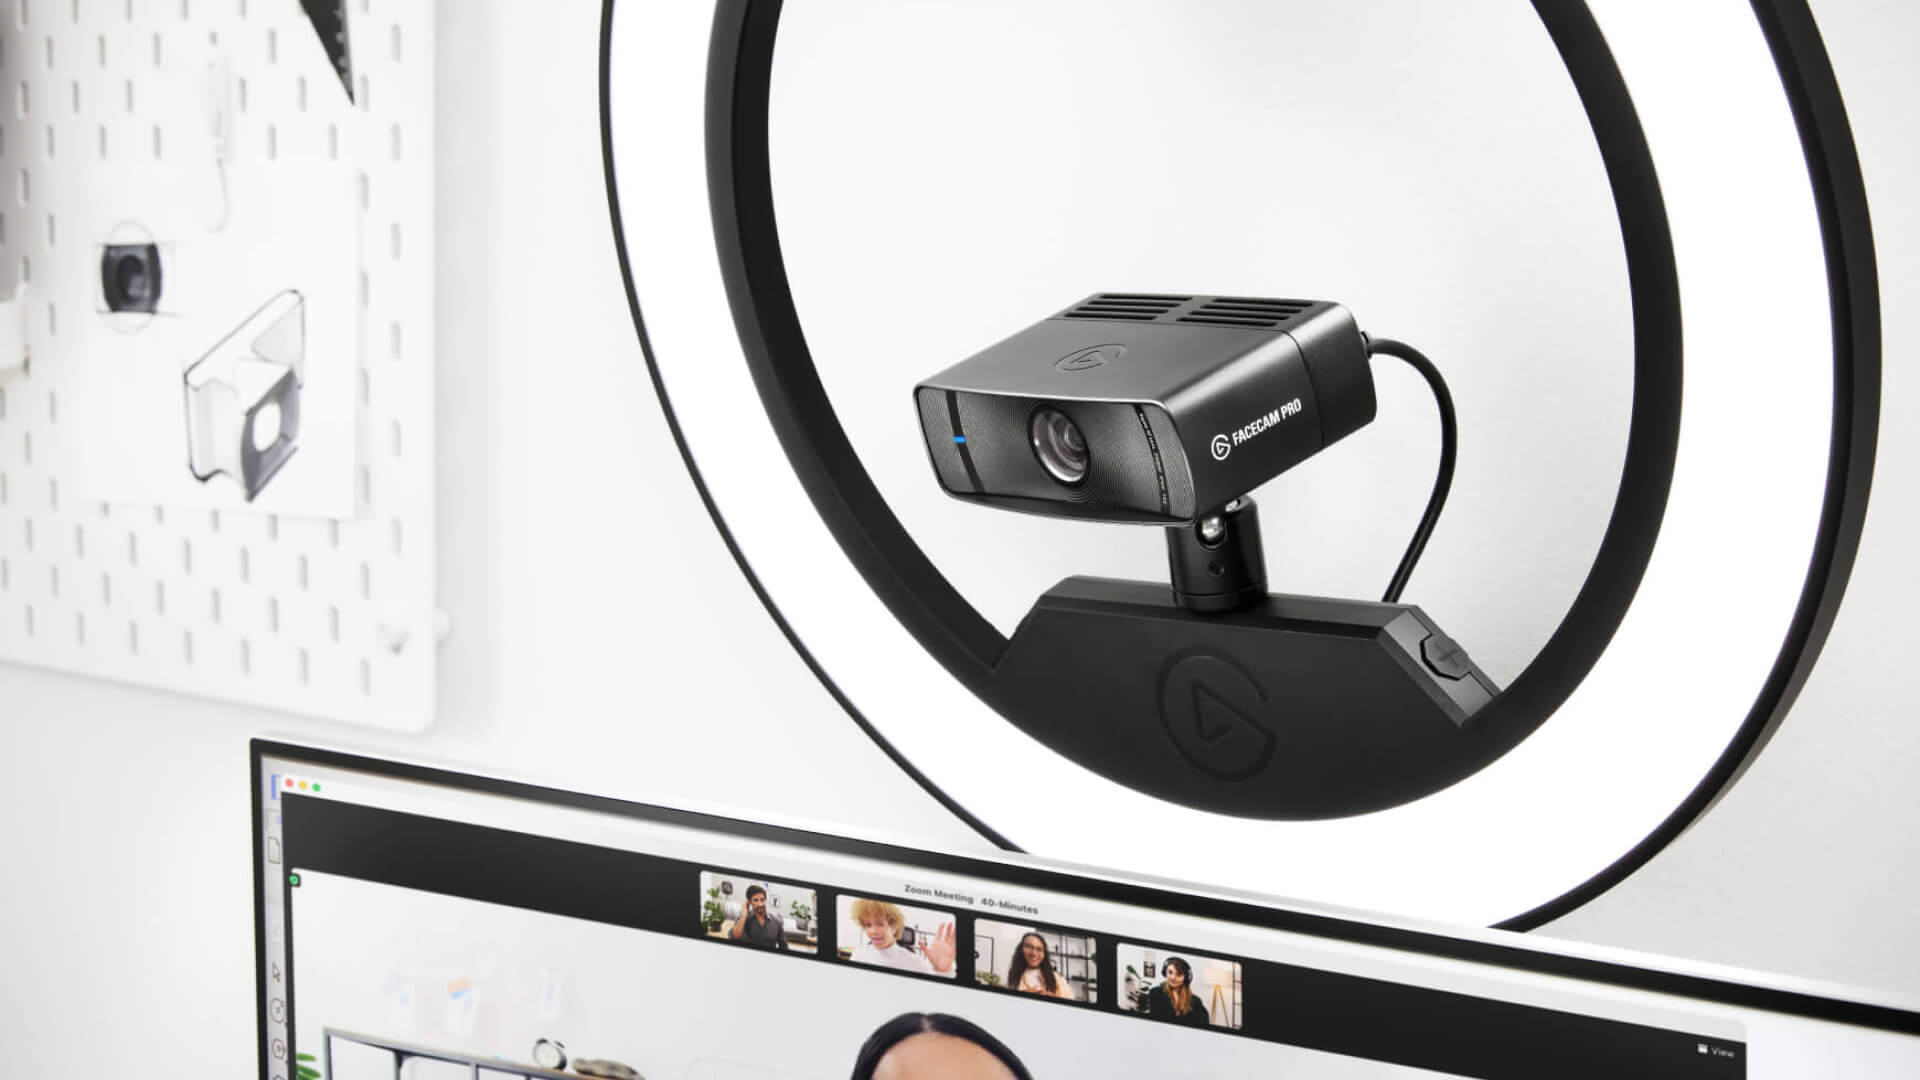 MASSIVE Facecam UPGRADE - Elgato Cam Link 4K Review & Sample Footage 